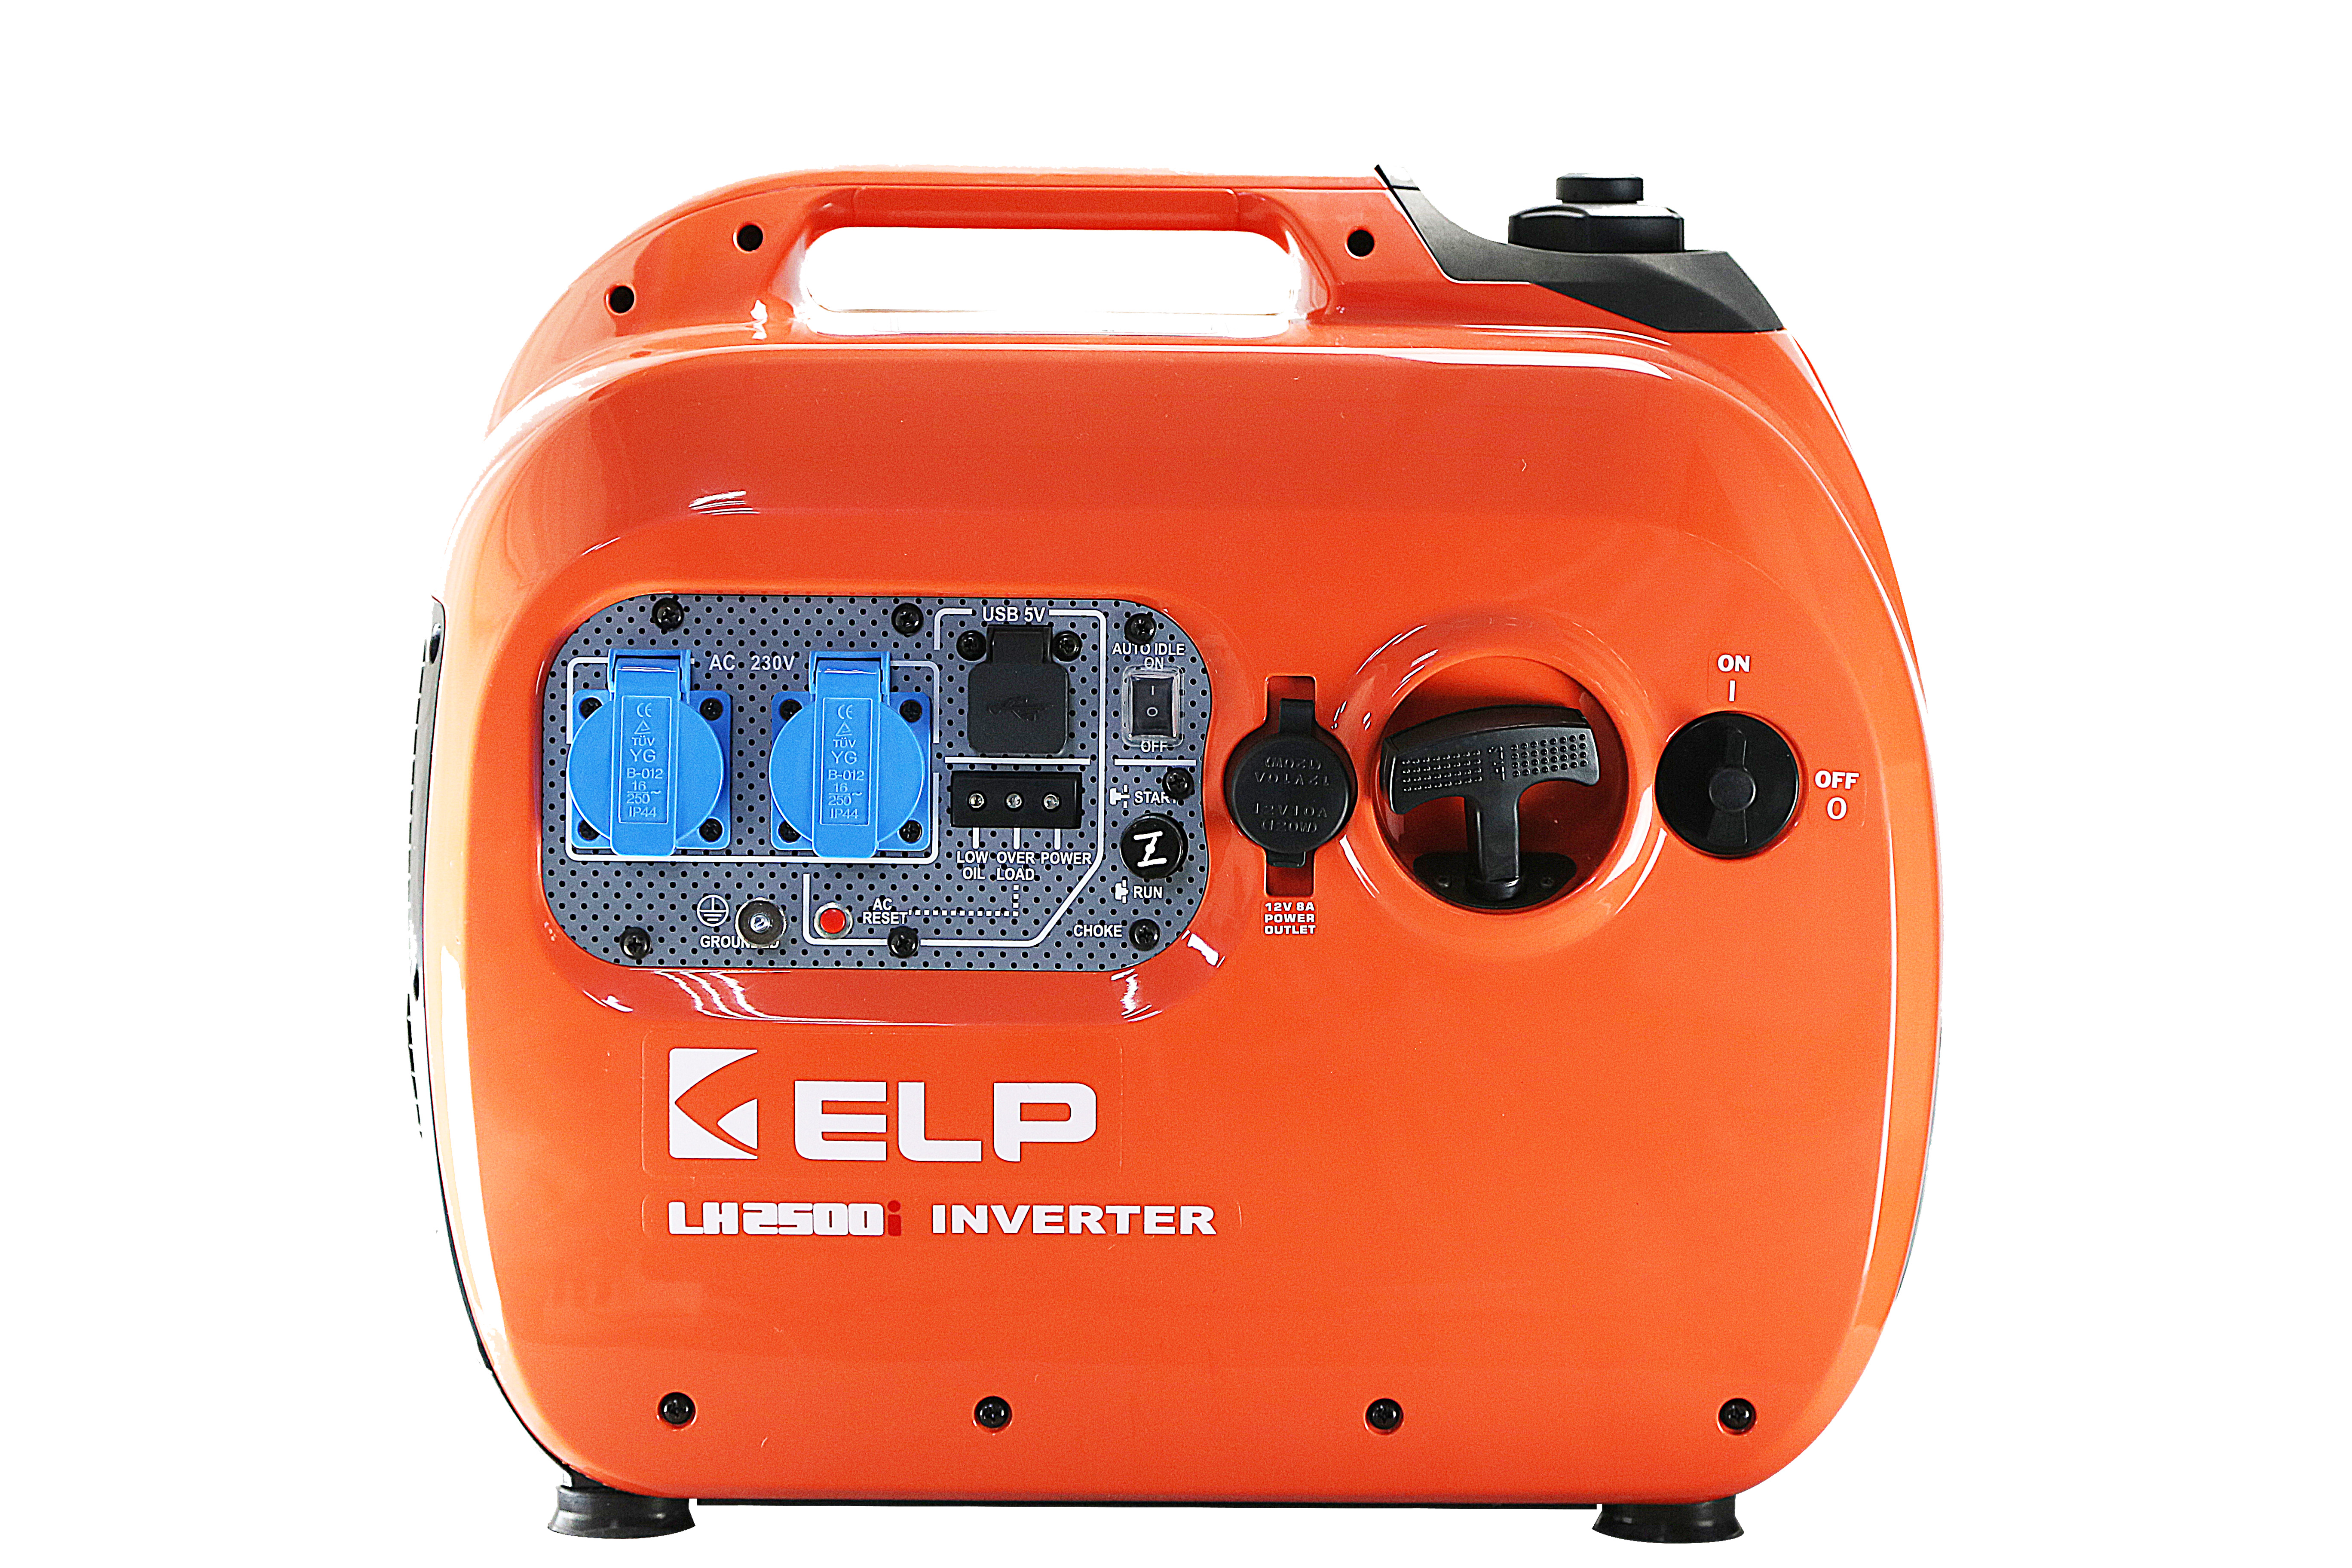 Inverter generator LH2500i